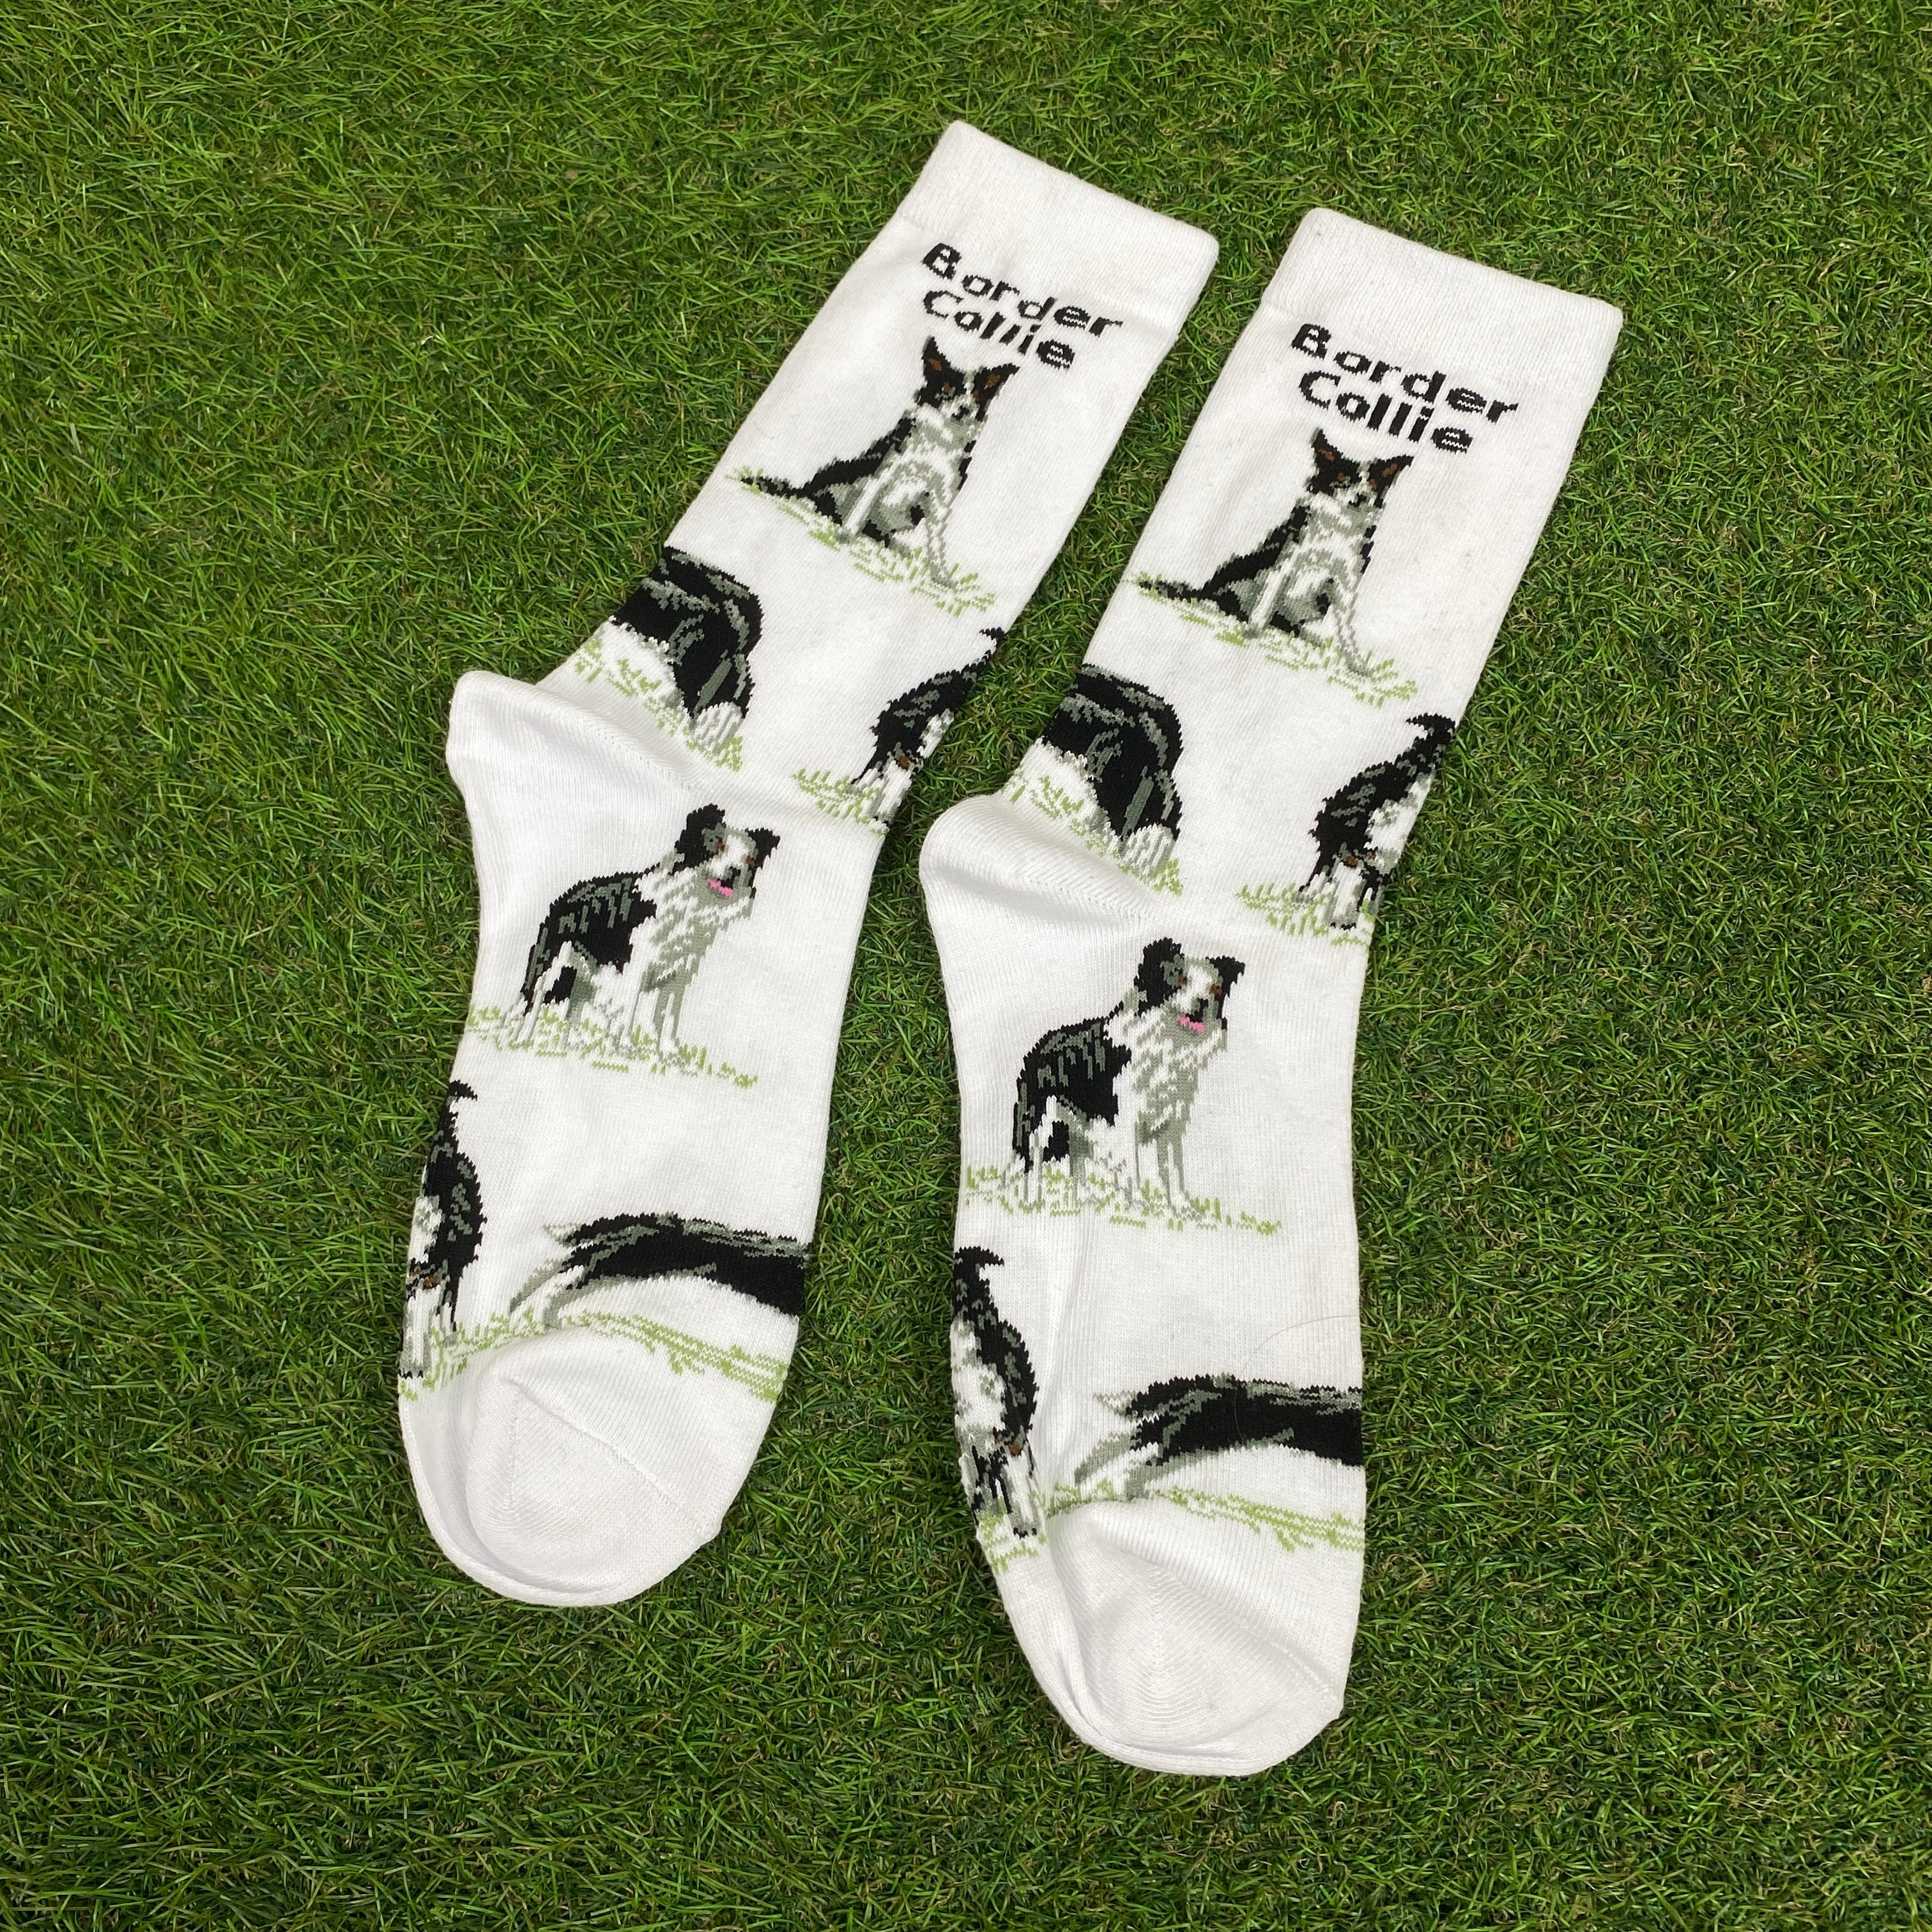 Retro Border Collie Dog Socks White UK12-8